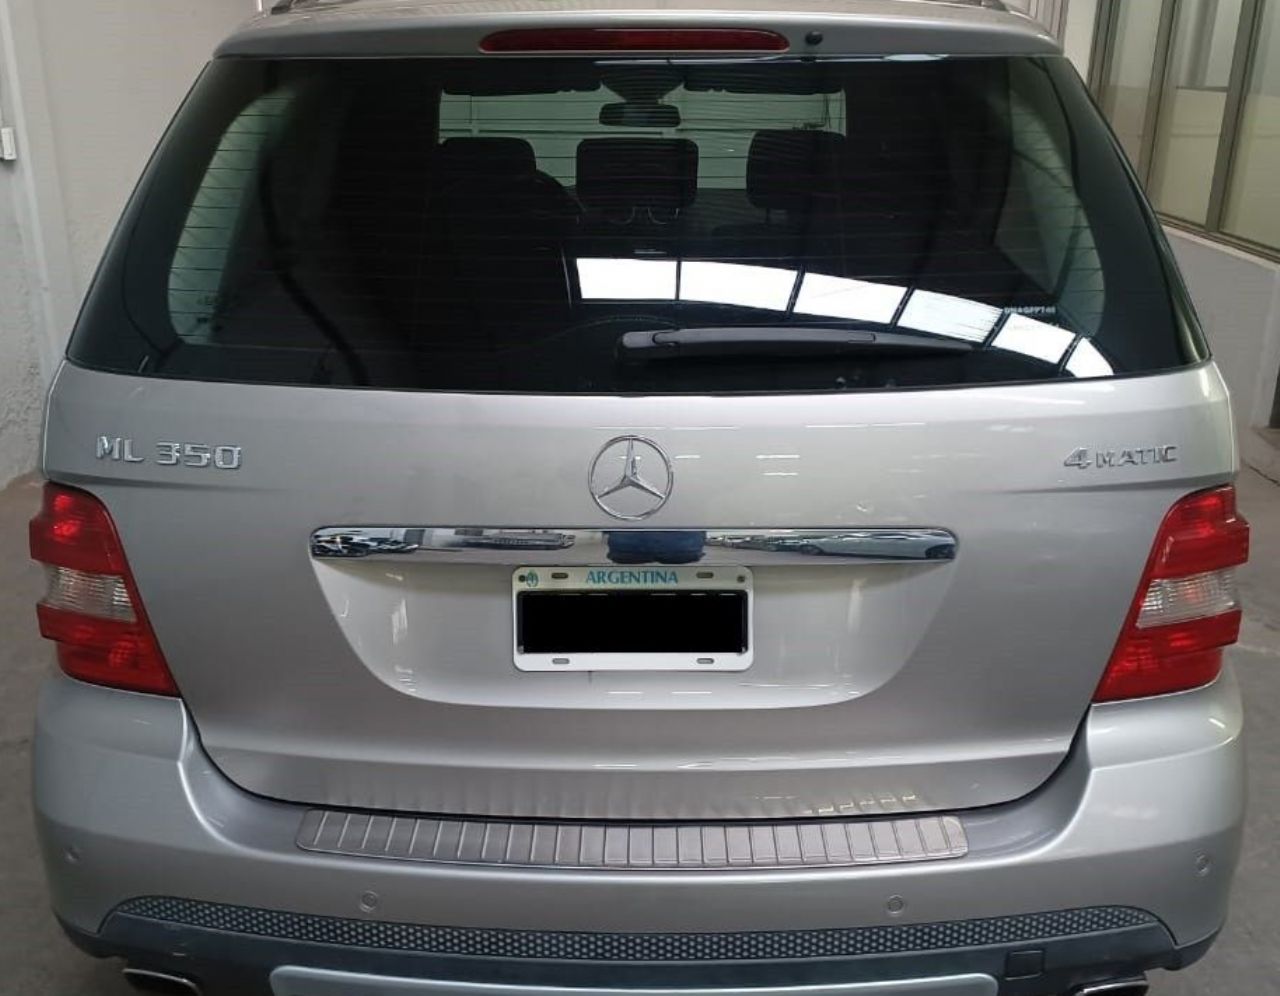 Mercedes Benz Clase ML Usado en Mendoza, deRuedas